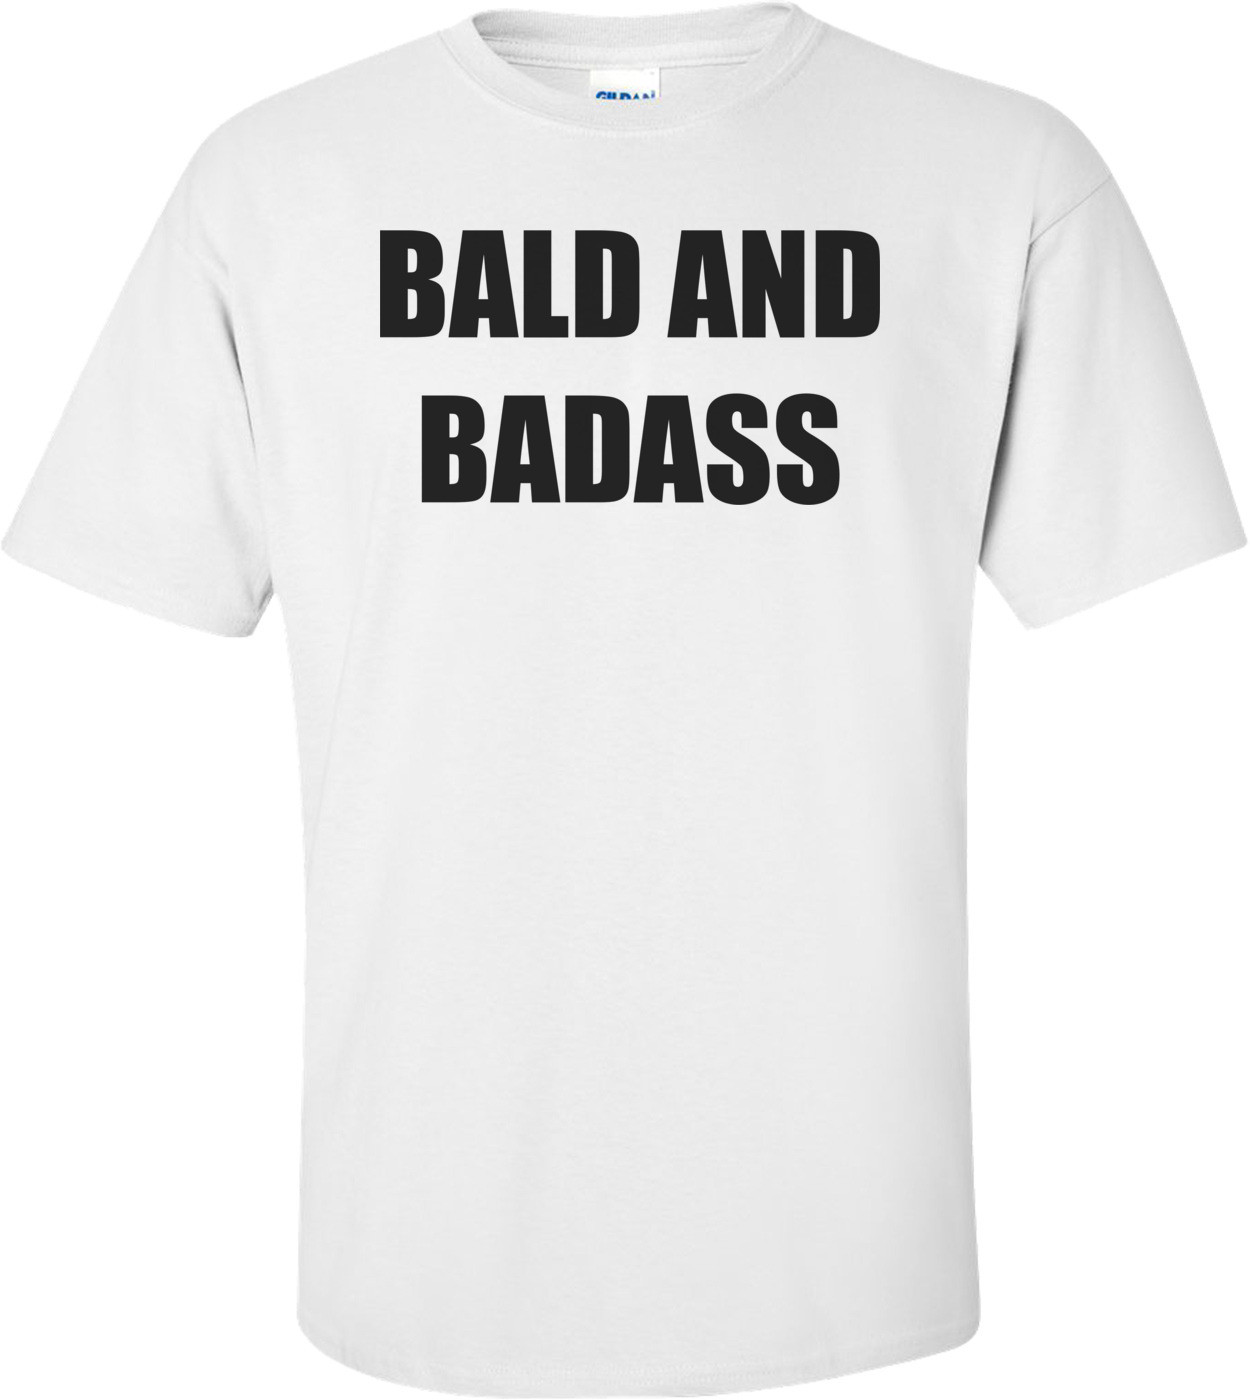 BALD AND BADASS Shirt